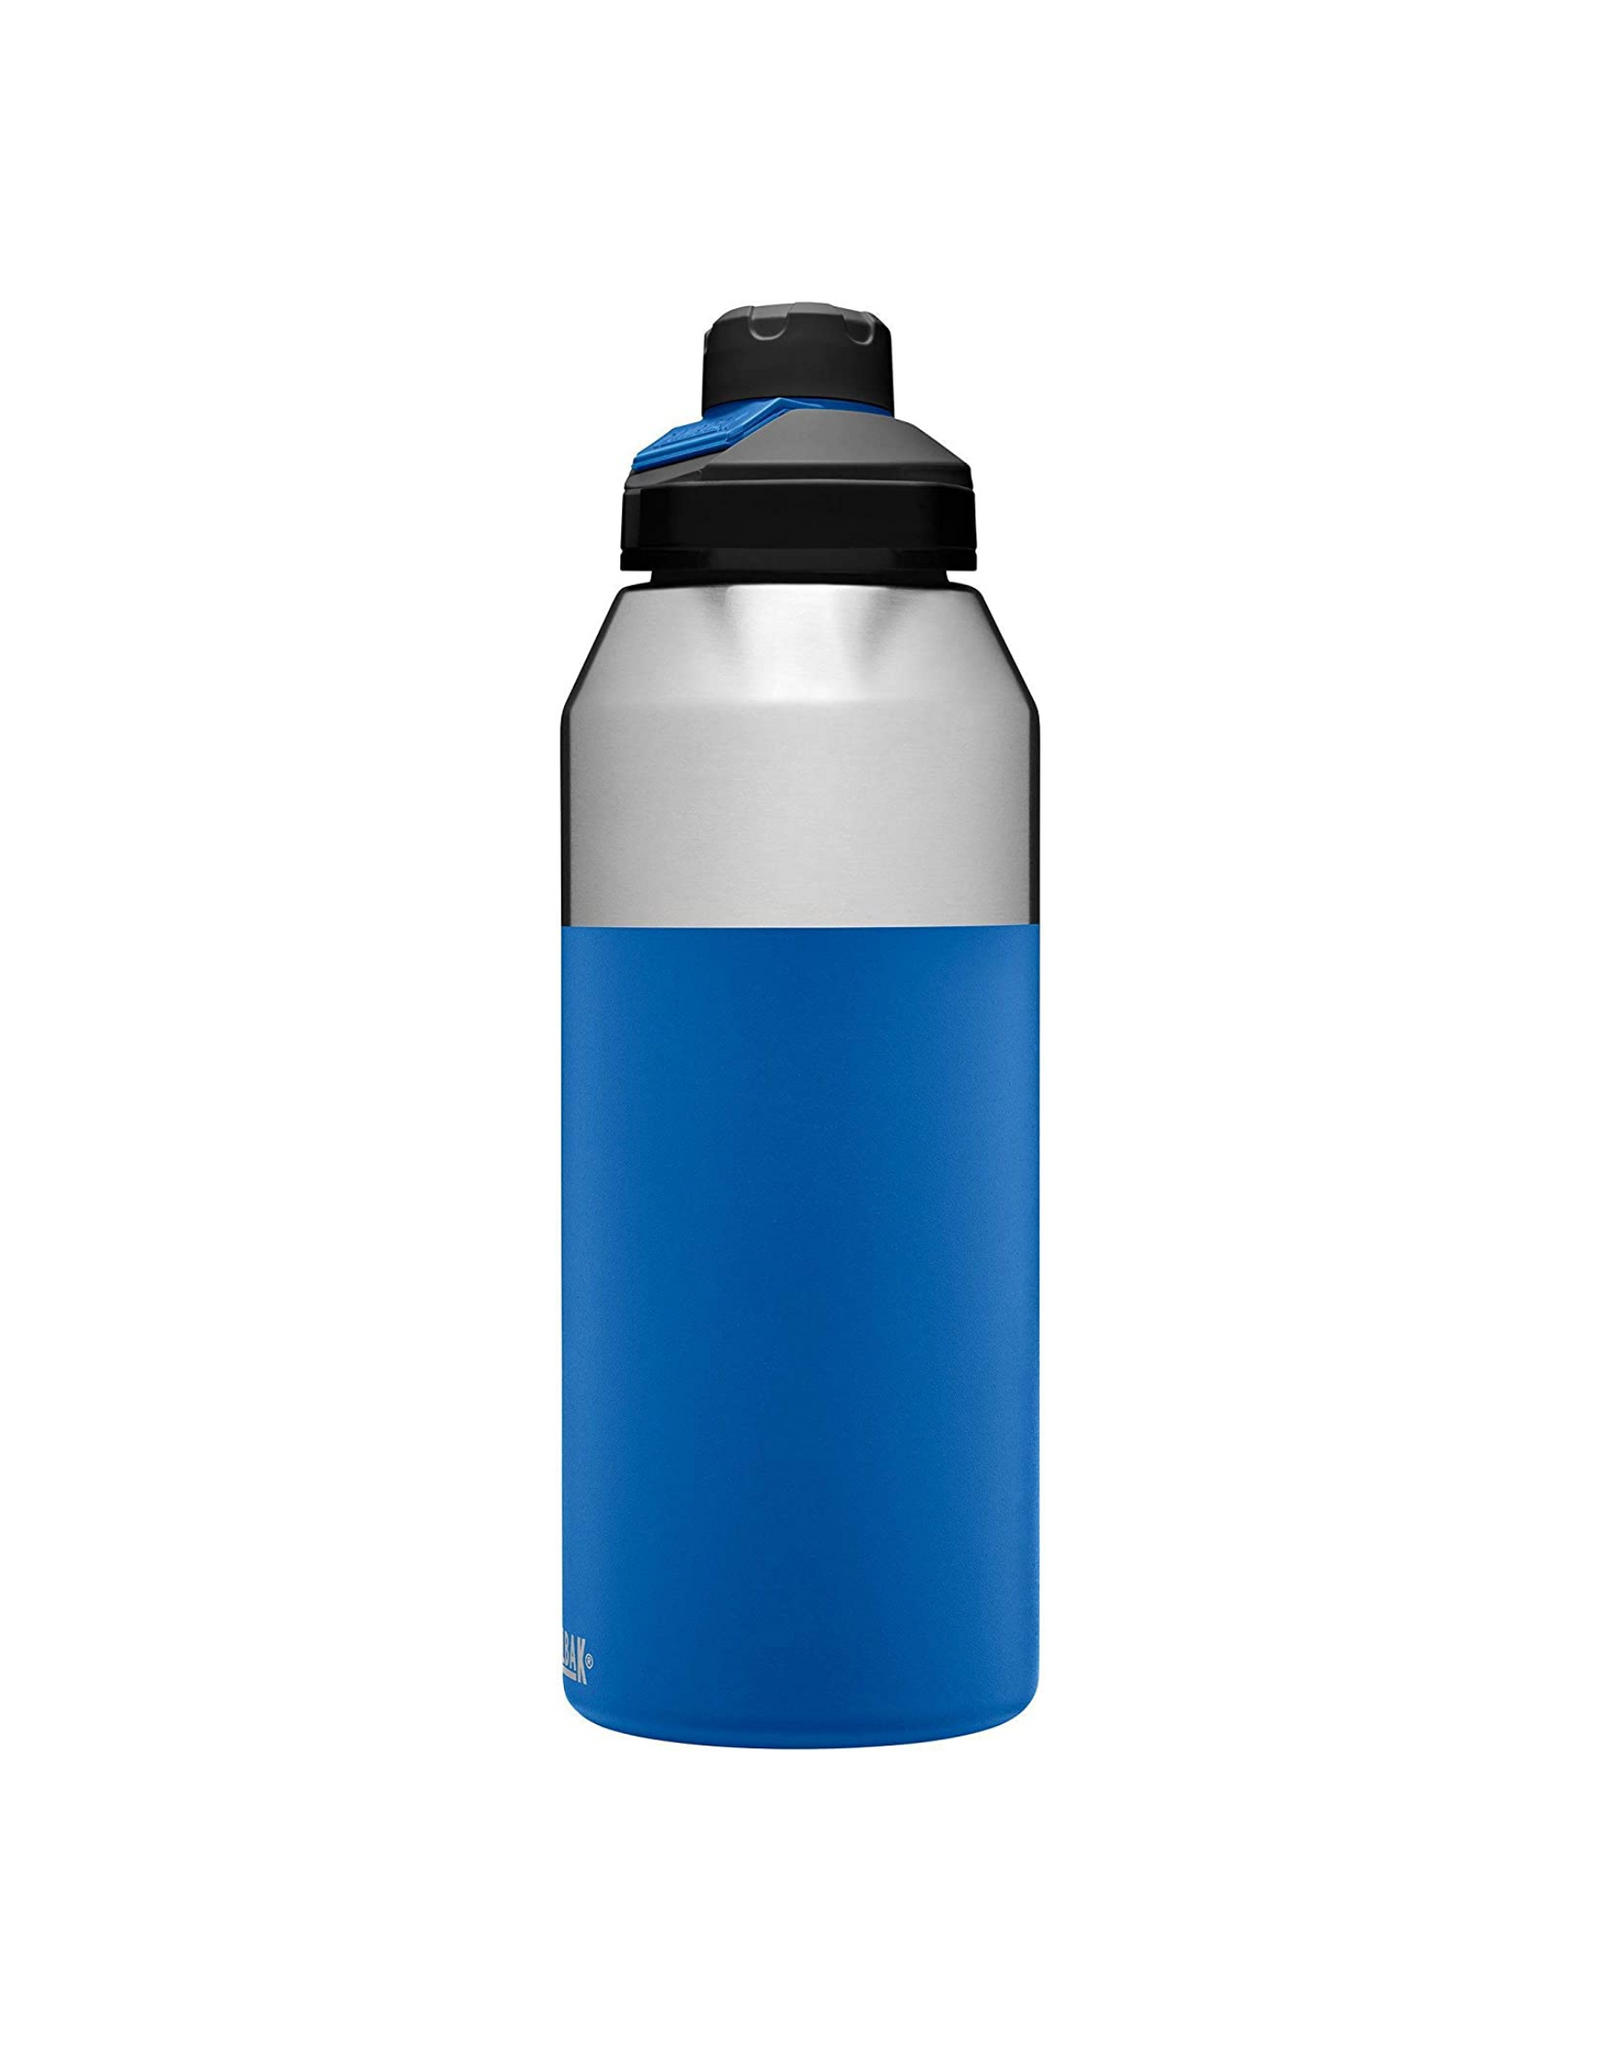 40oz Stainless Steel Bottle, Insulated Beverage Bottle